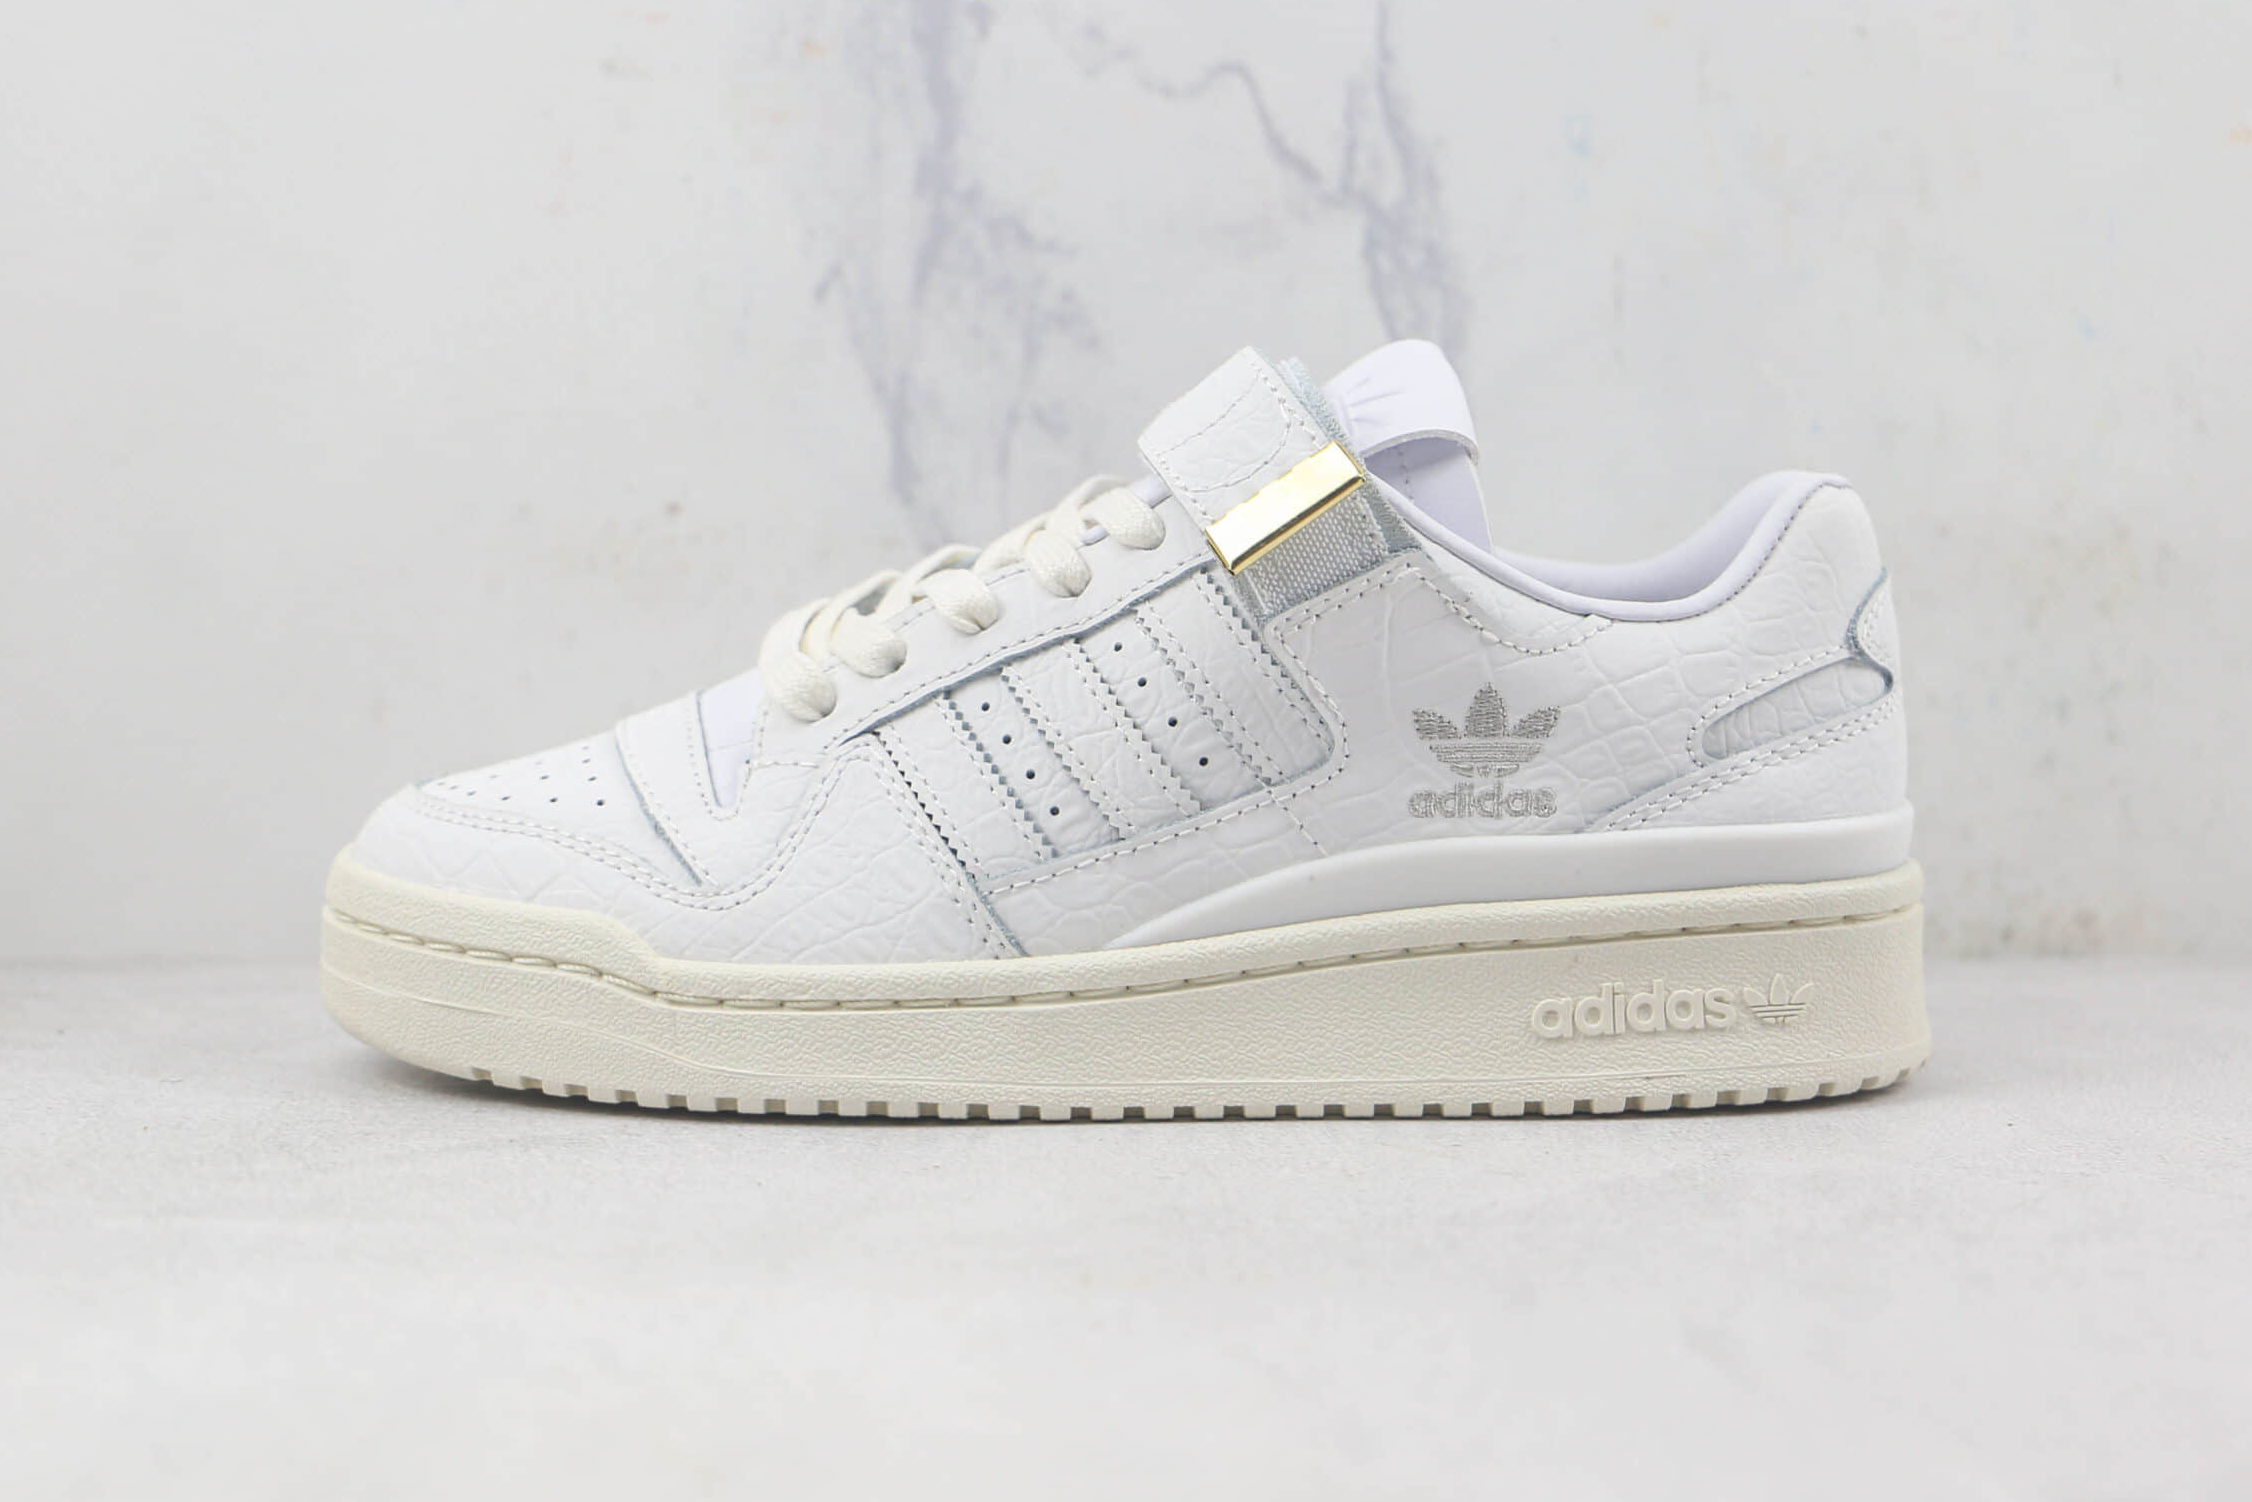 Adidas Forum 84 Low 'Croc Skin - White': Stylish & Classic Sneakers